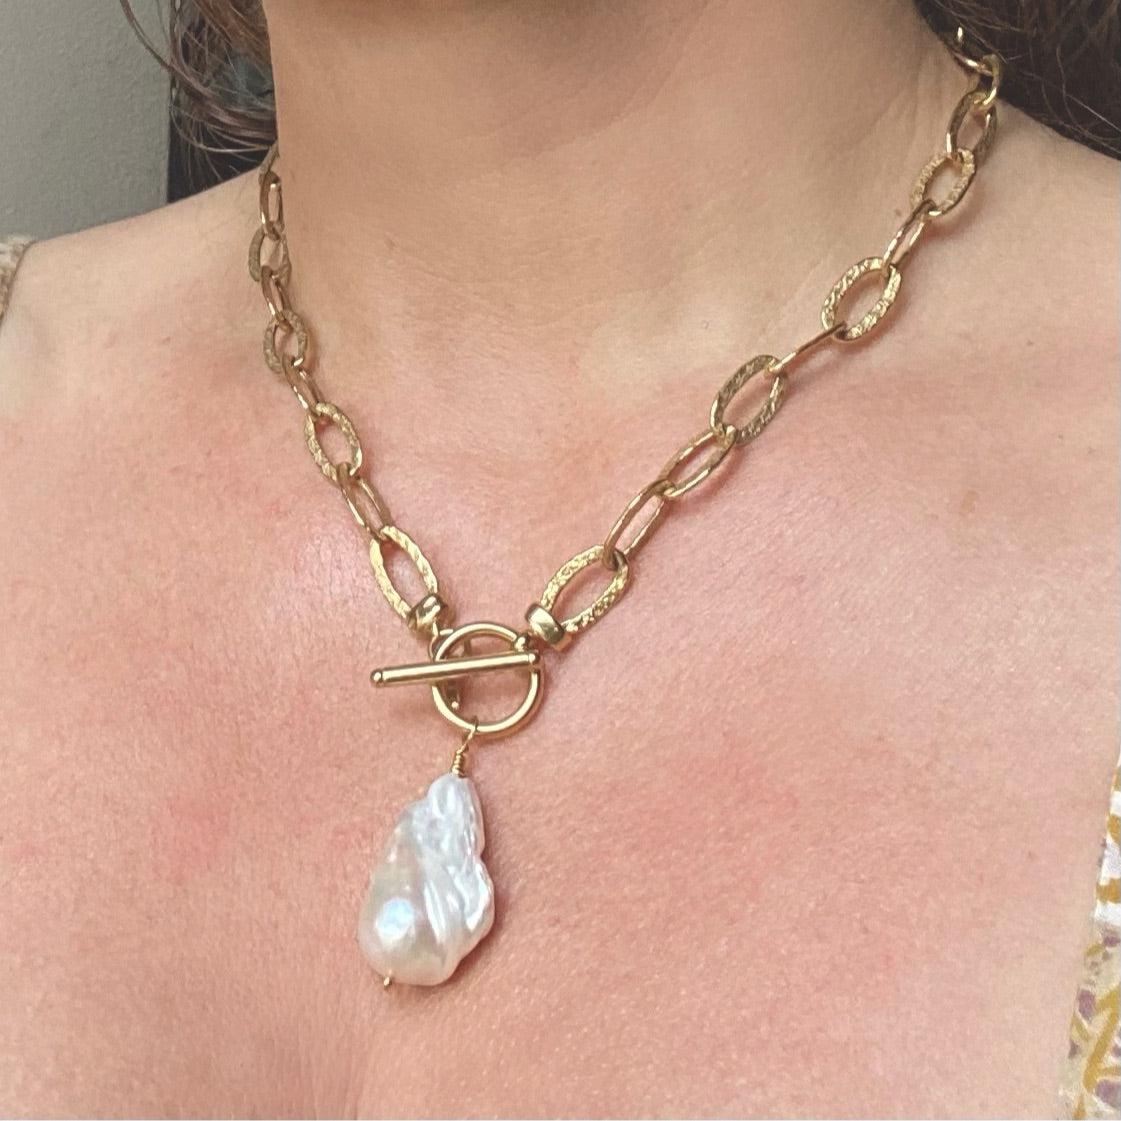 Sisterhood Necklace - Chunky Chain Necklace